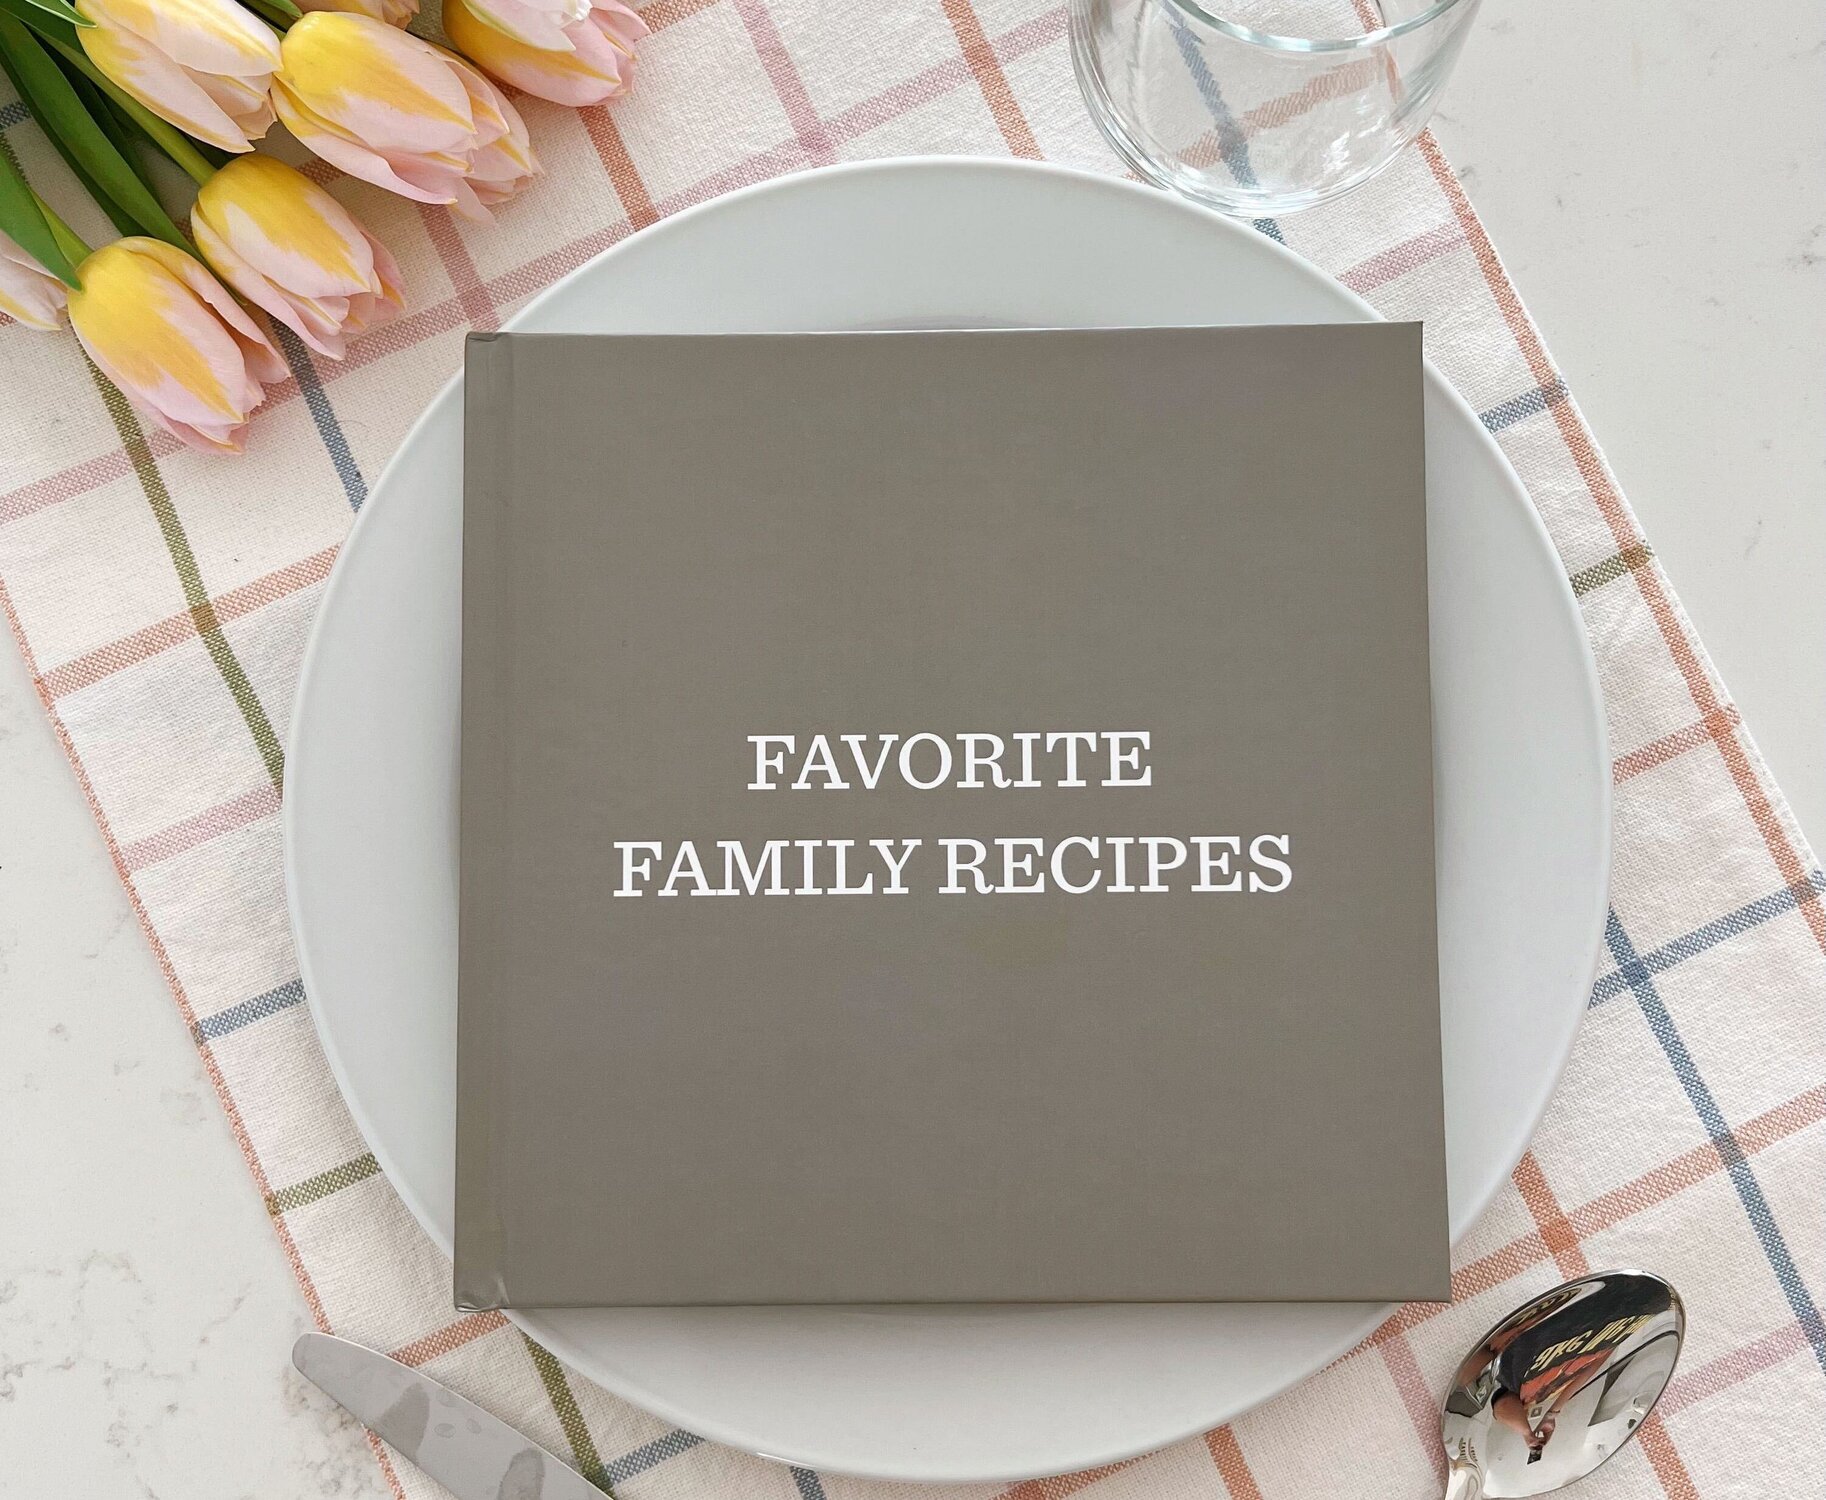 The “Family Recipe” Photo Book